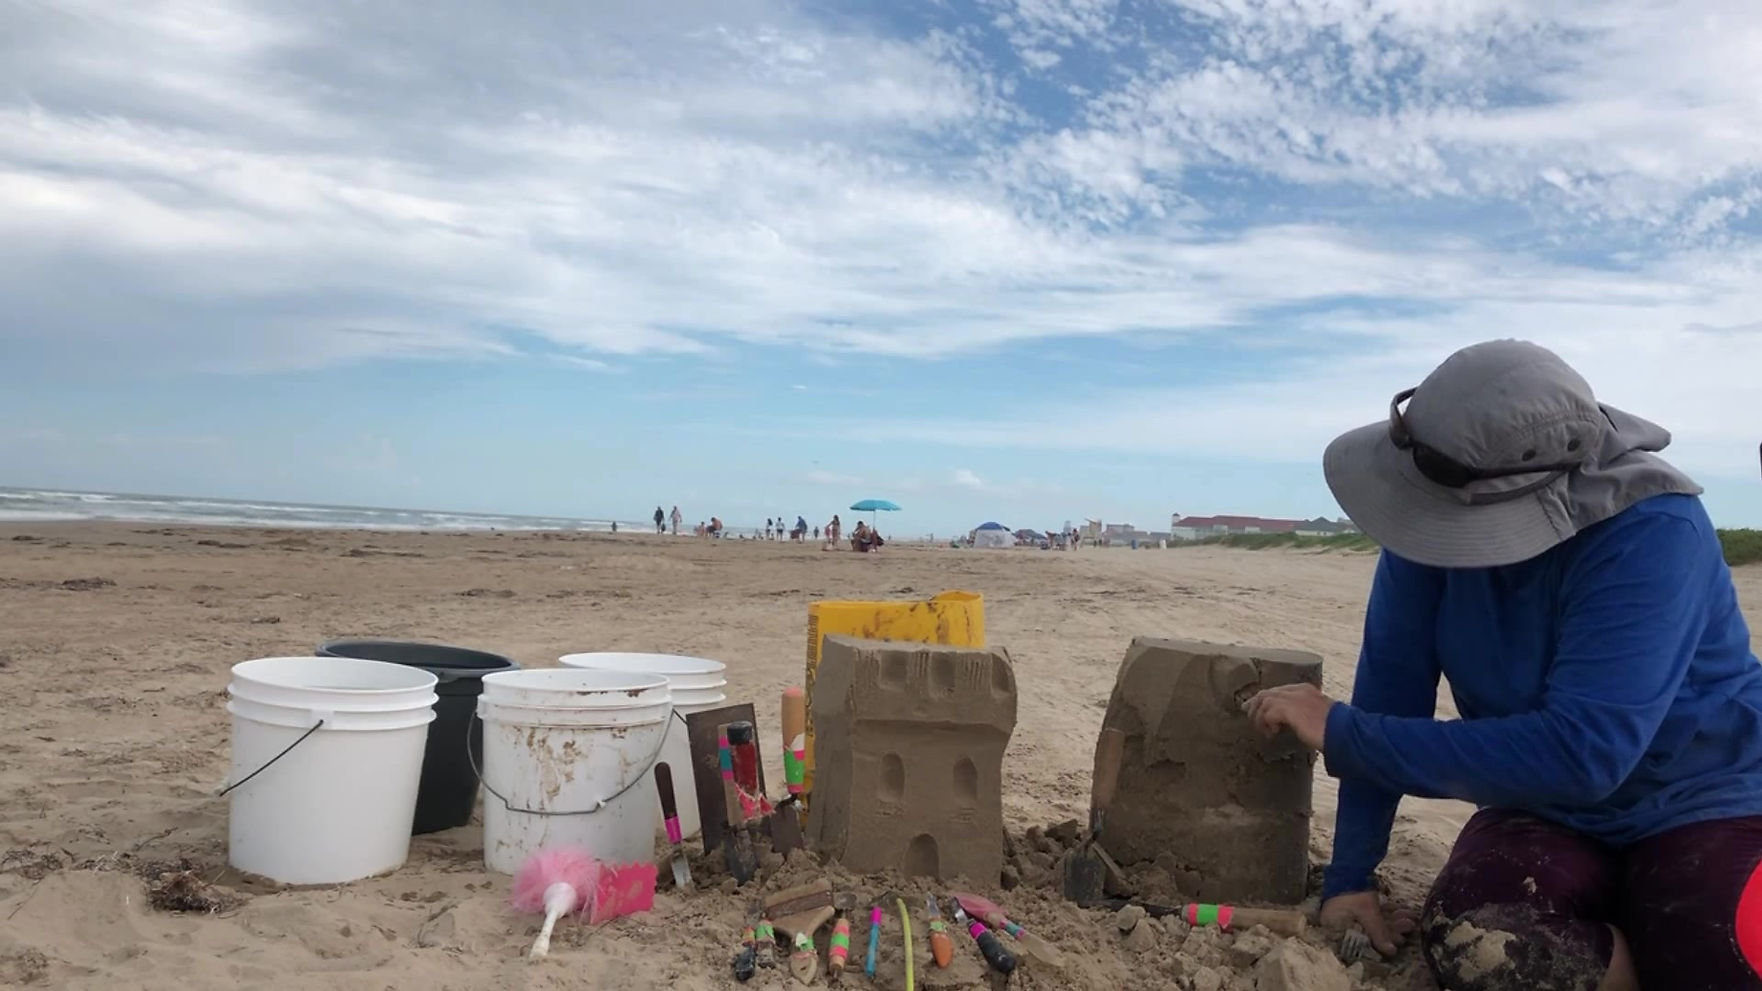 Build Your Own Sand Sculpture!